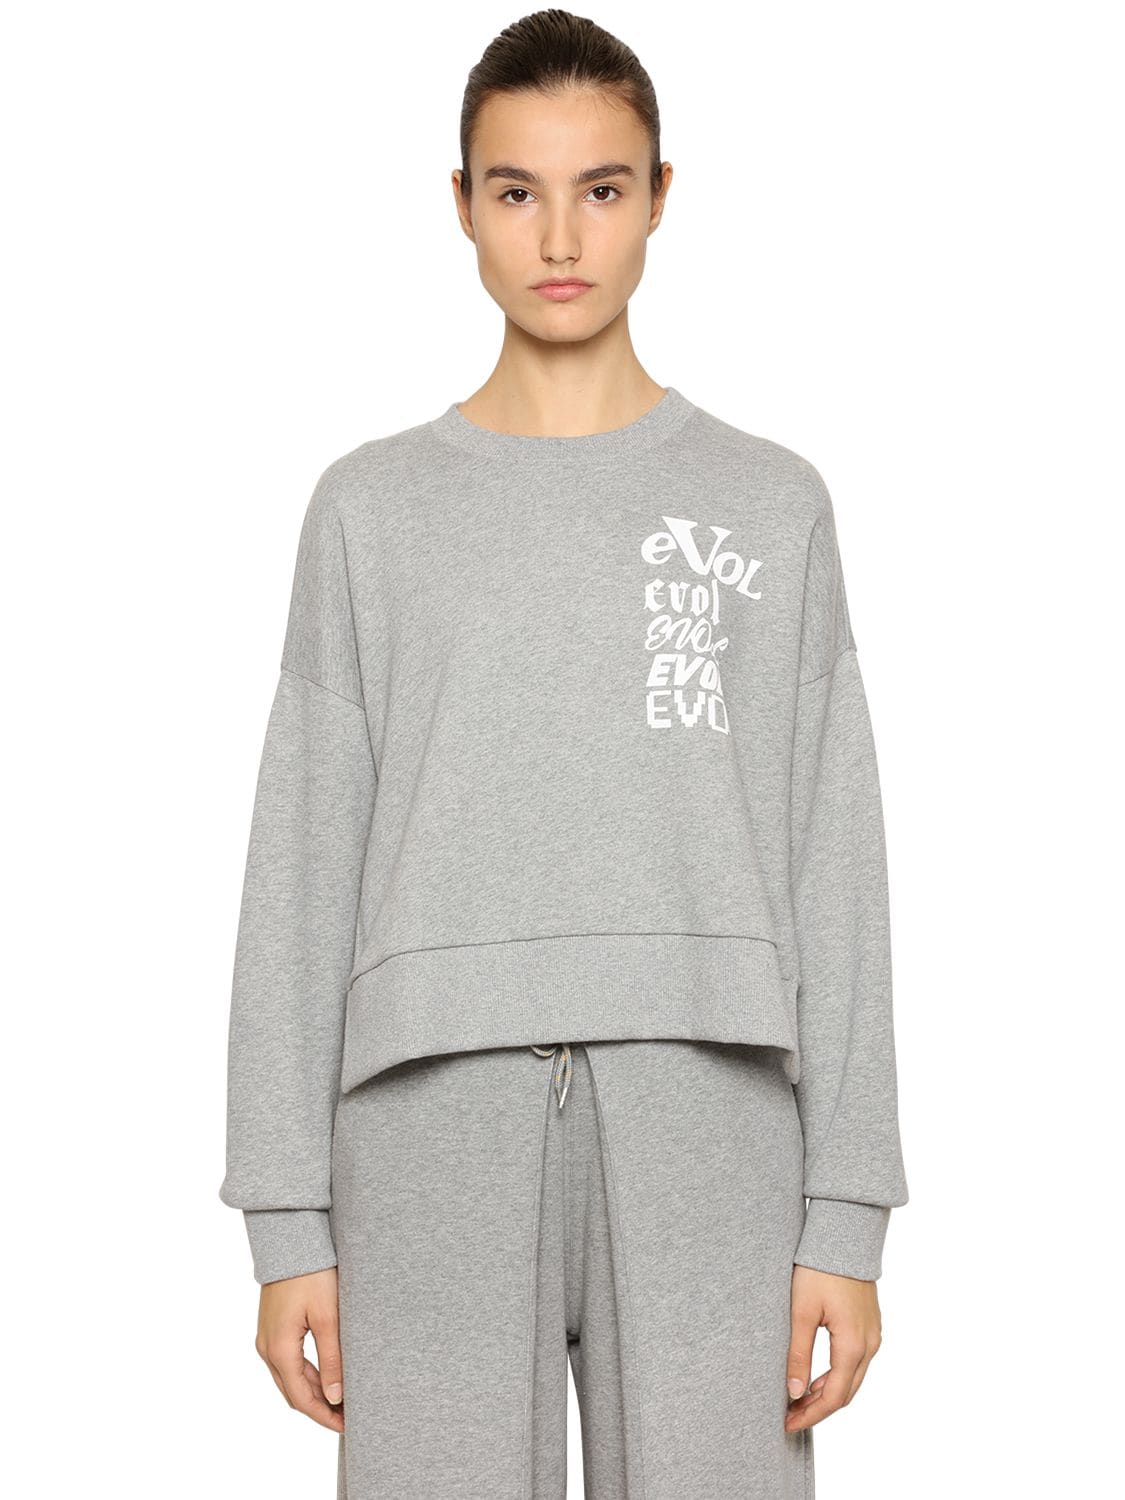 Aalto Evol Printed Cropped Sweatshirt In Grey